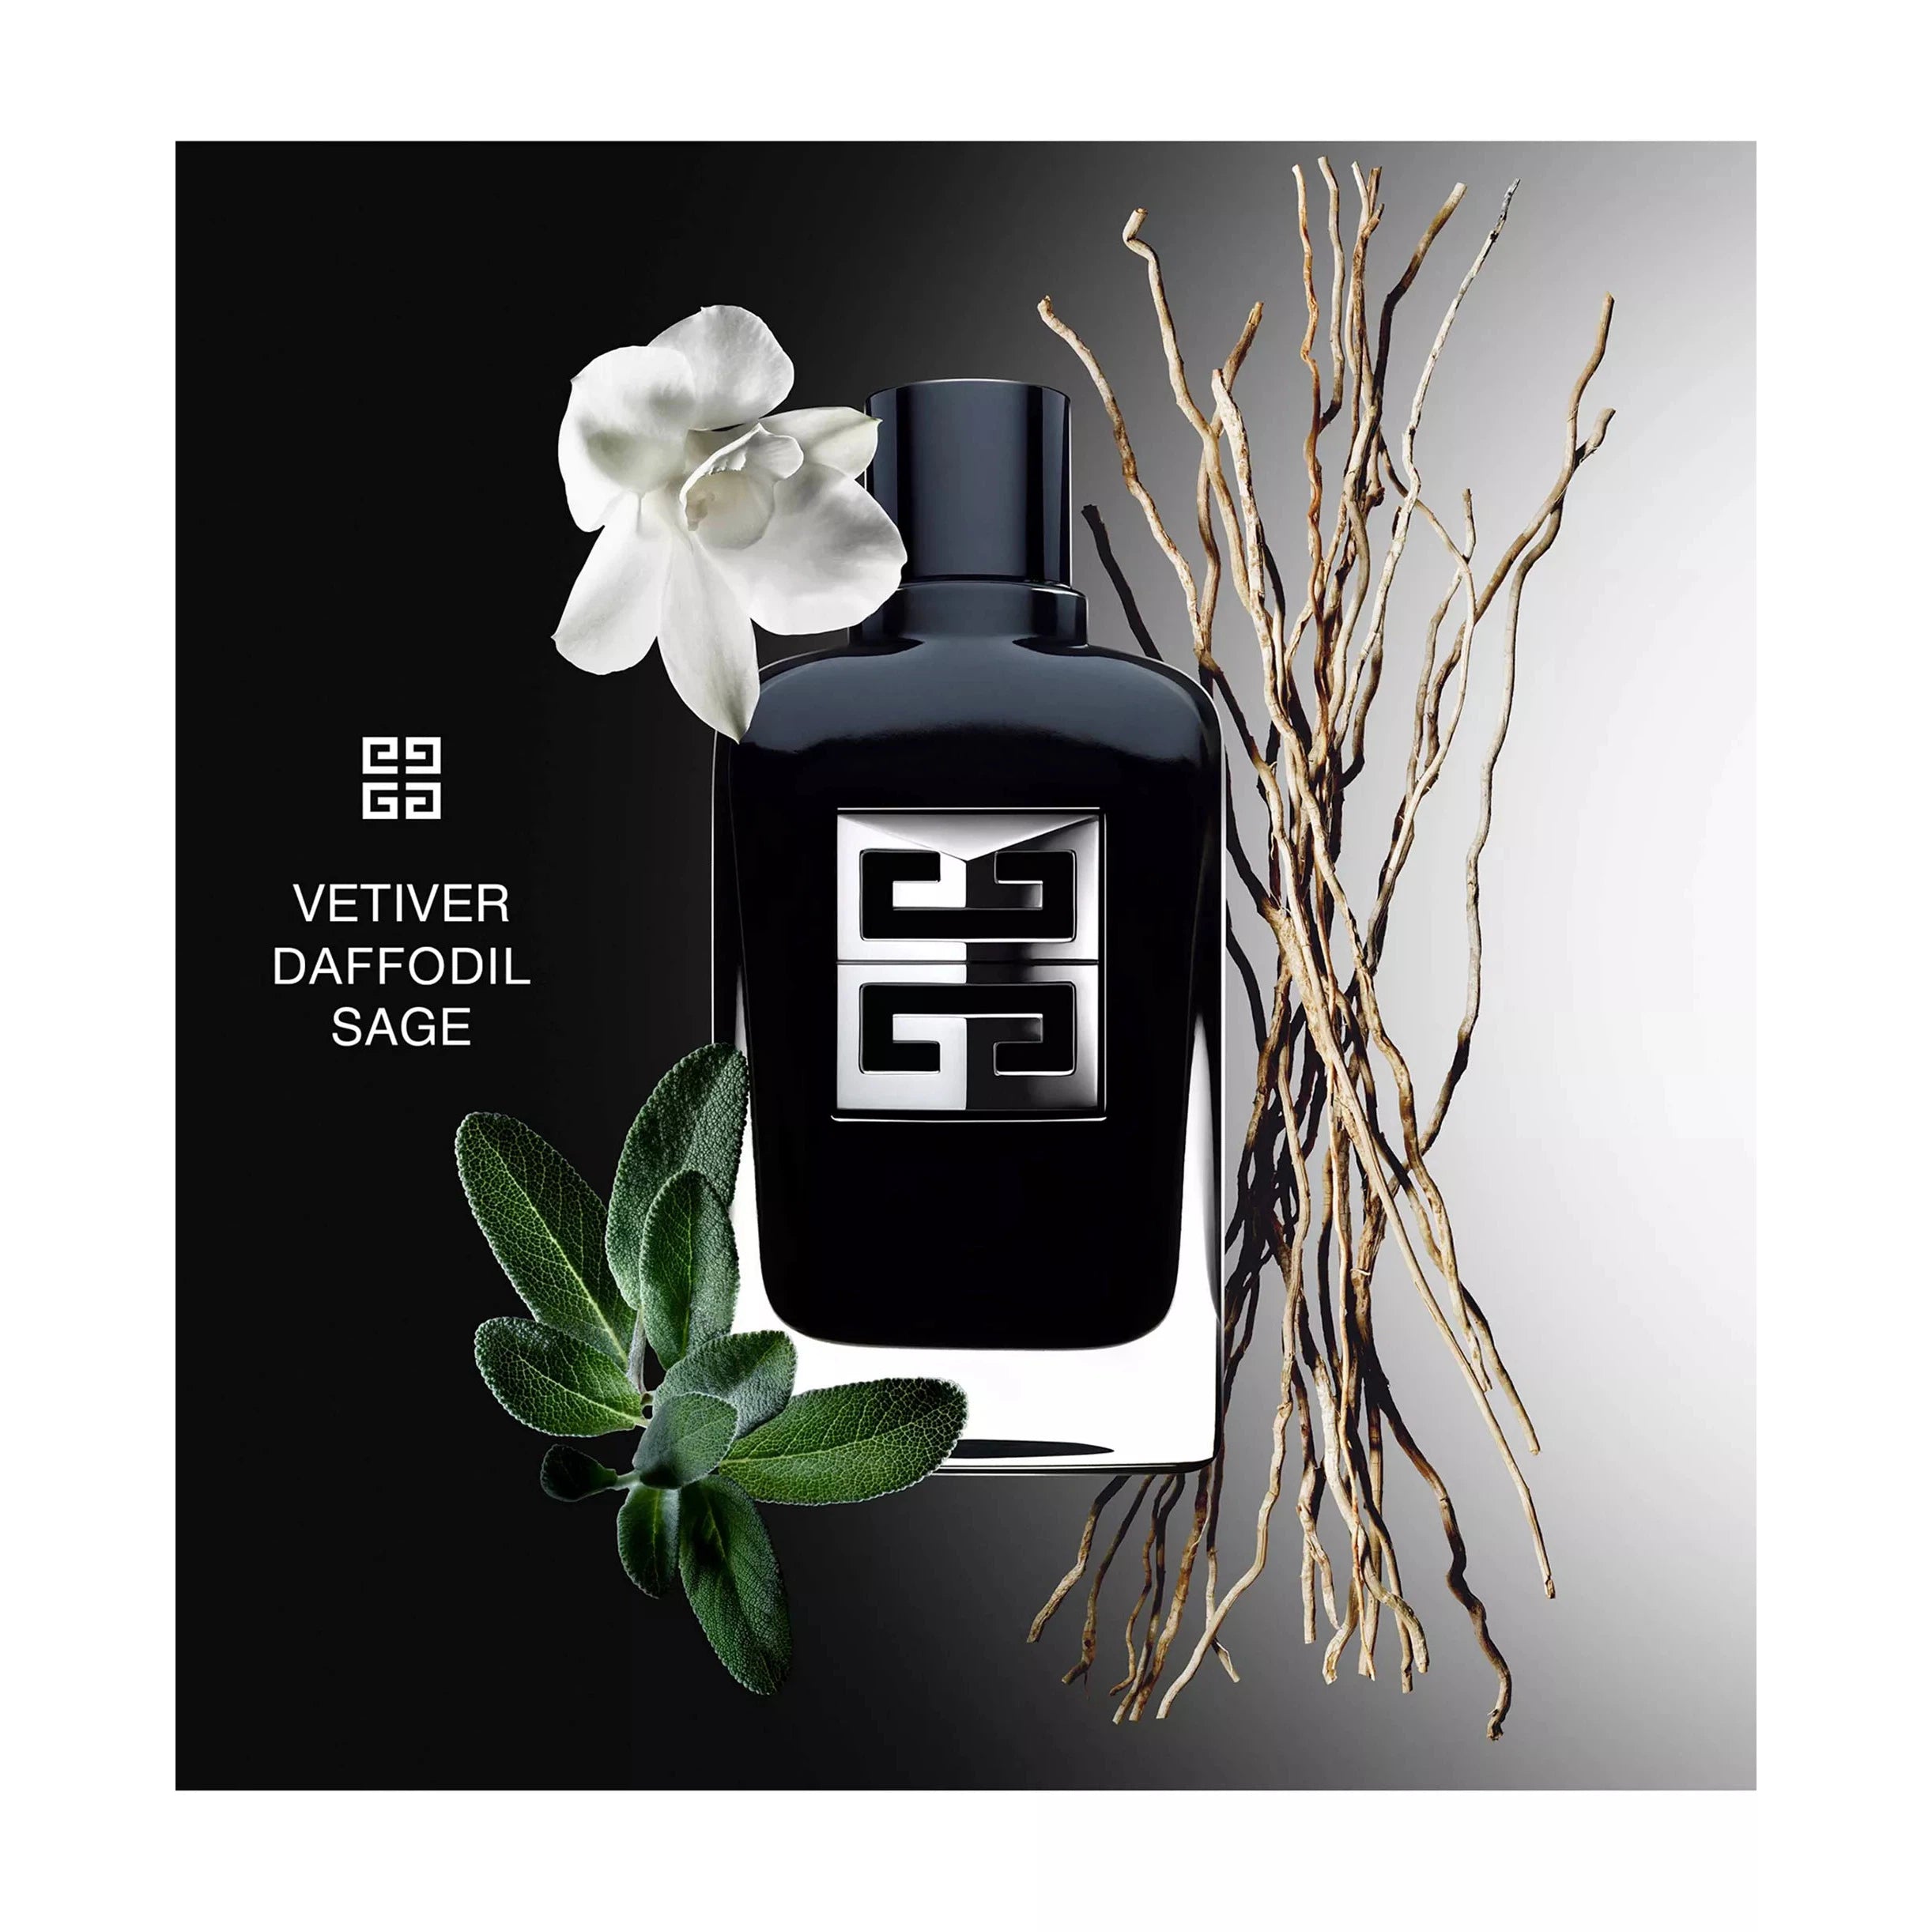 Estuche Givenchy Gentleman Society EDP (M) / 2 Pc SP 100 ml; DEO - 3274872467231- Prive Perfumes Honduras